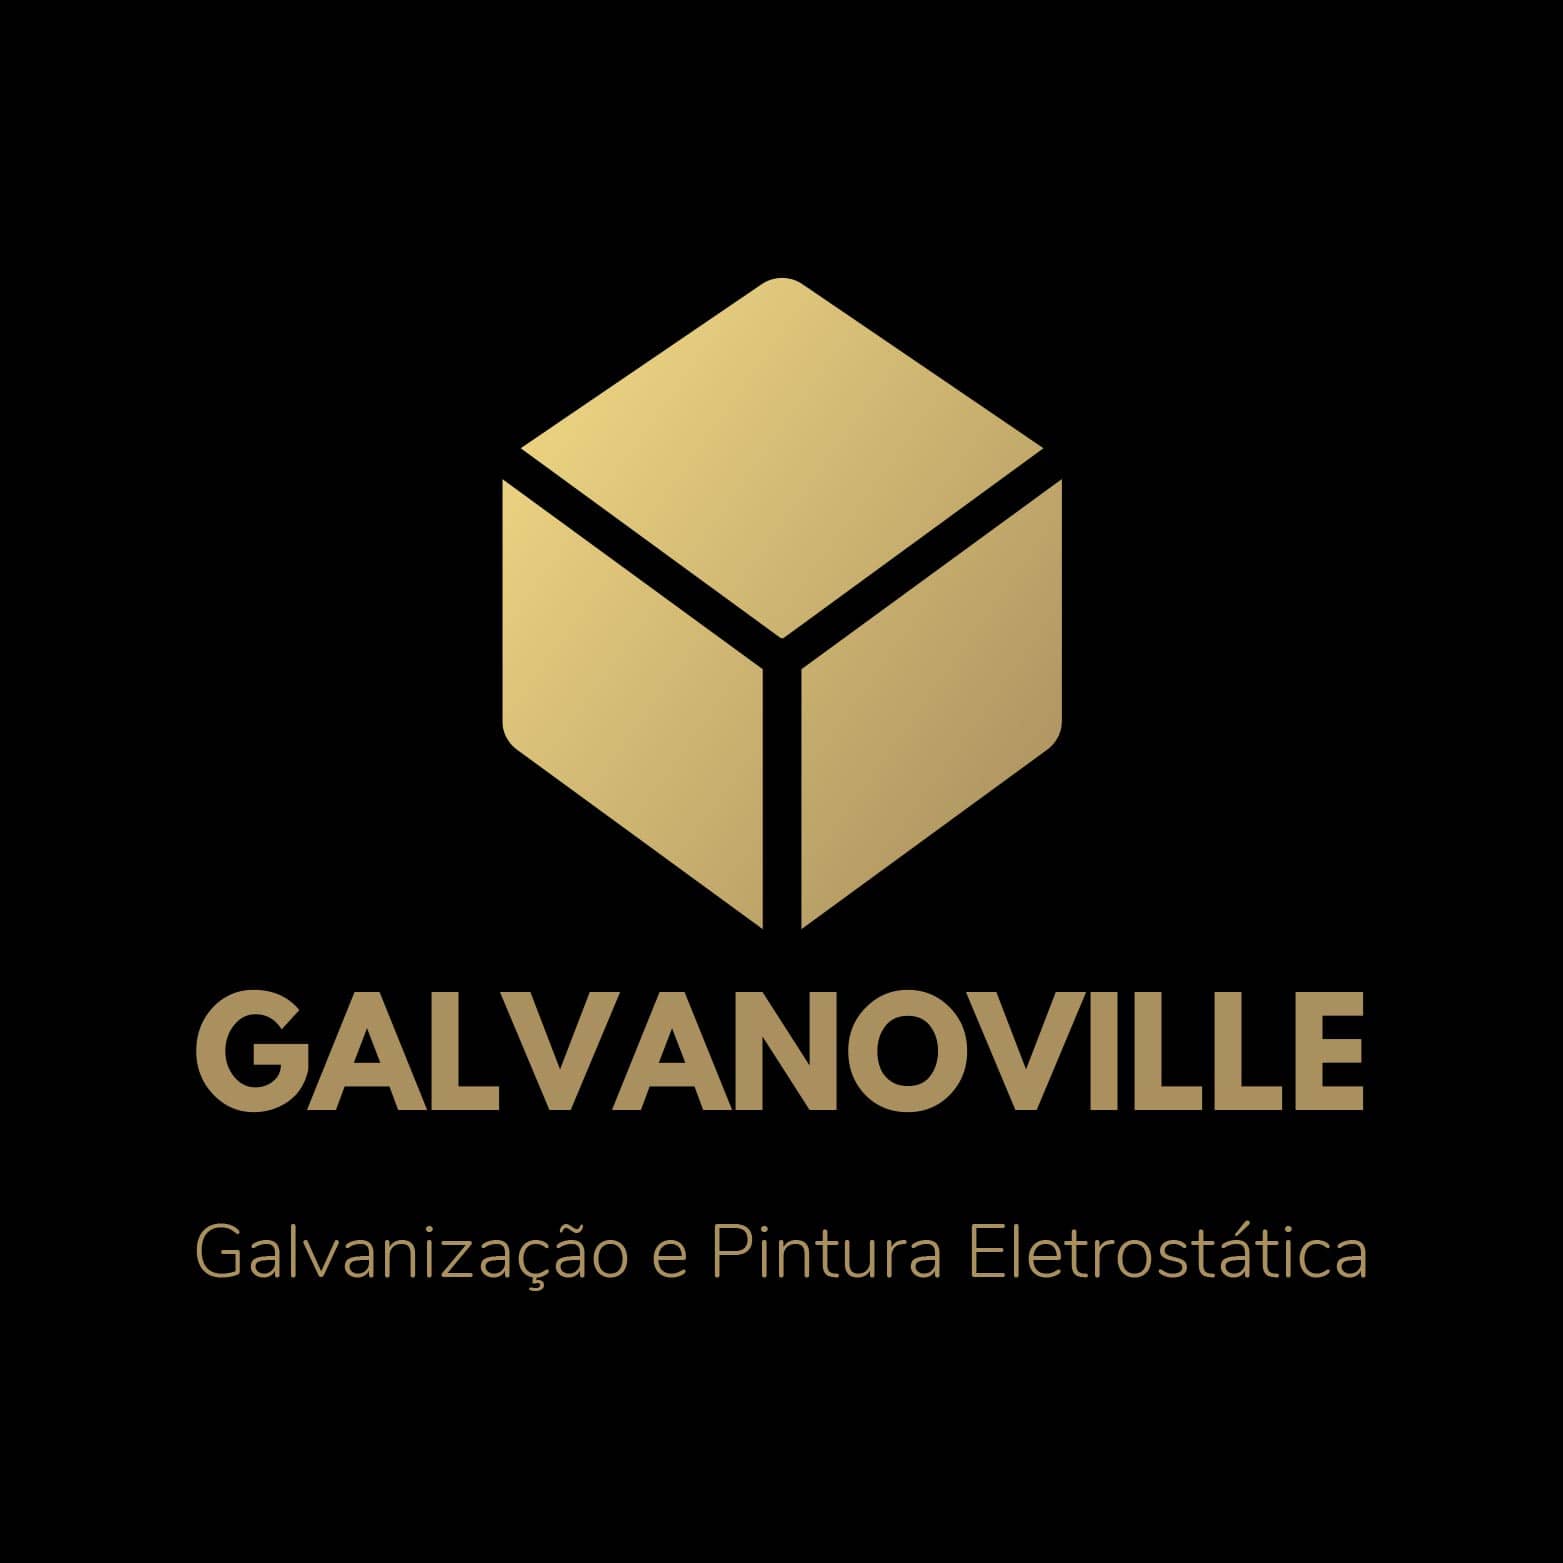 Galvanoville